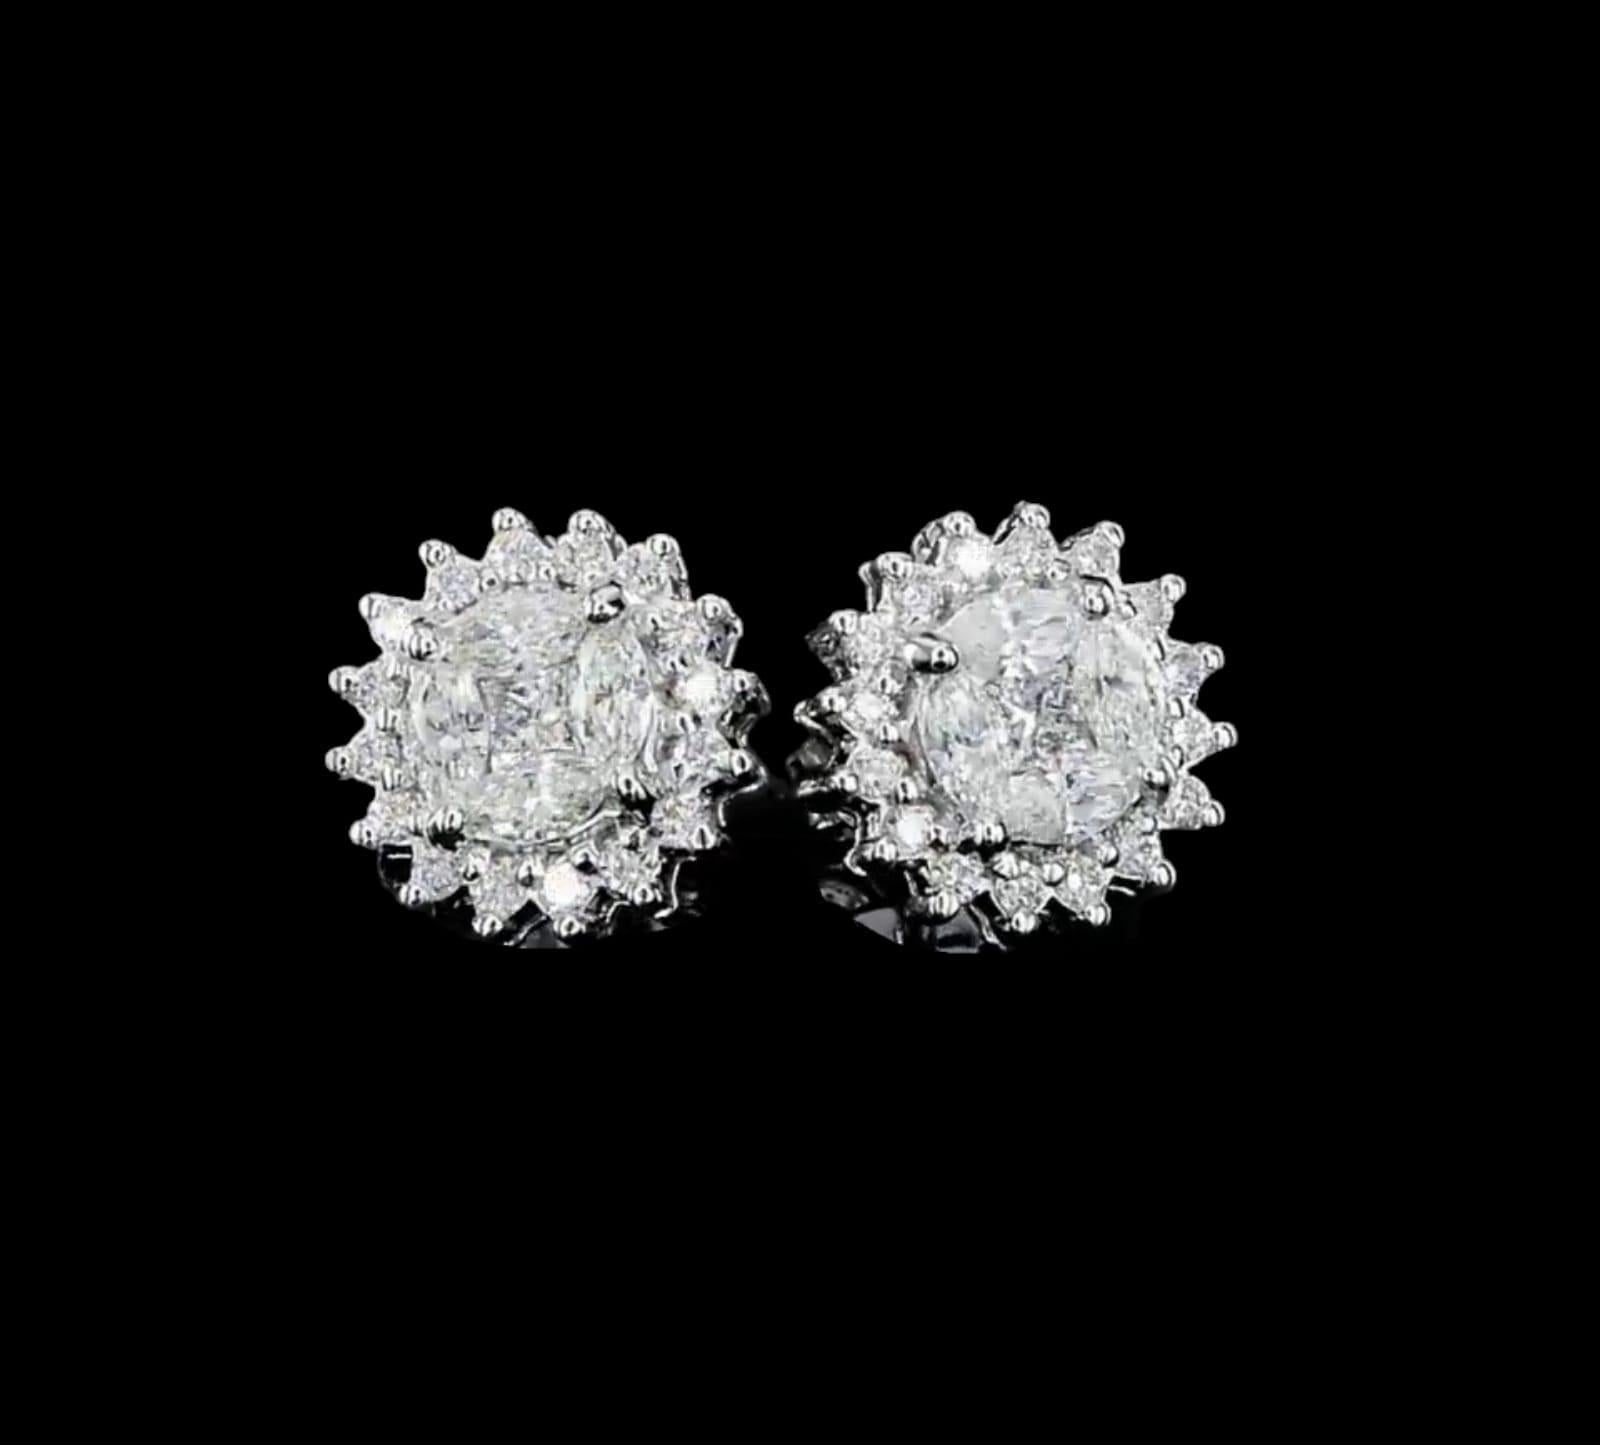 **100% NATURAL FANCY COLOUR DIAMOND JEWELRY**

✪ Jewelry Details ✪

♦ MAIN STONE DETAILS

➛ Stone Shape: Round
➛ Stone Weight: 32 pcs - 0.34 cts

♦ SIDE STONE DETAILS

➛ Side pear diamond - 02 pcs - 0.18 cts

➛ Side marquise diamond - 08 pcs - 0.58